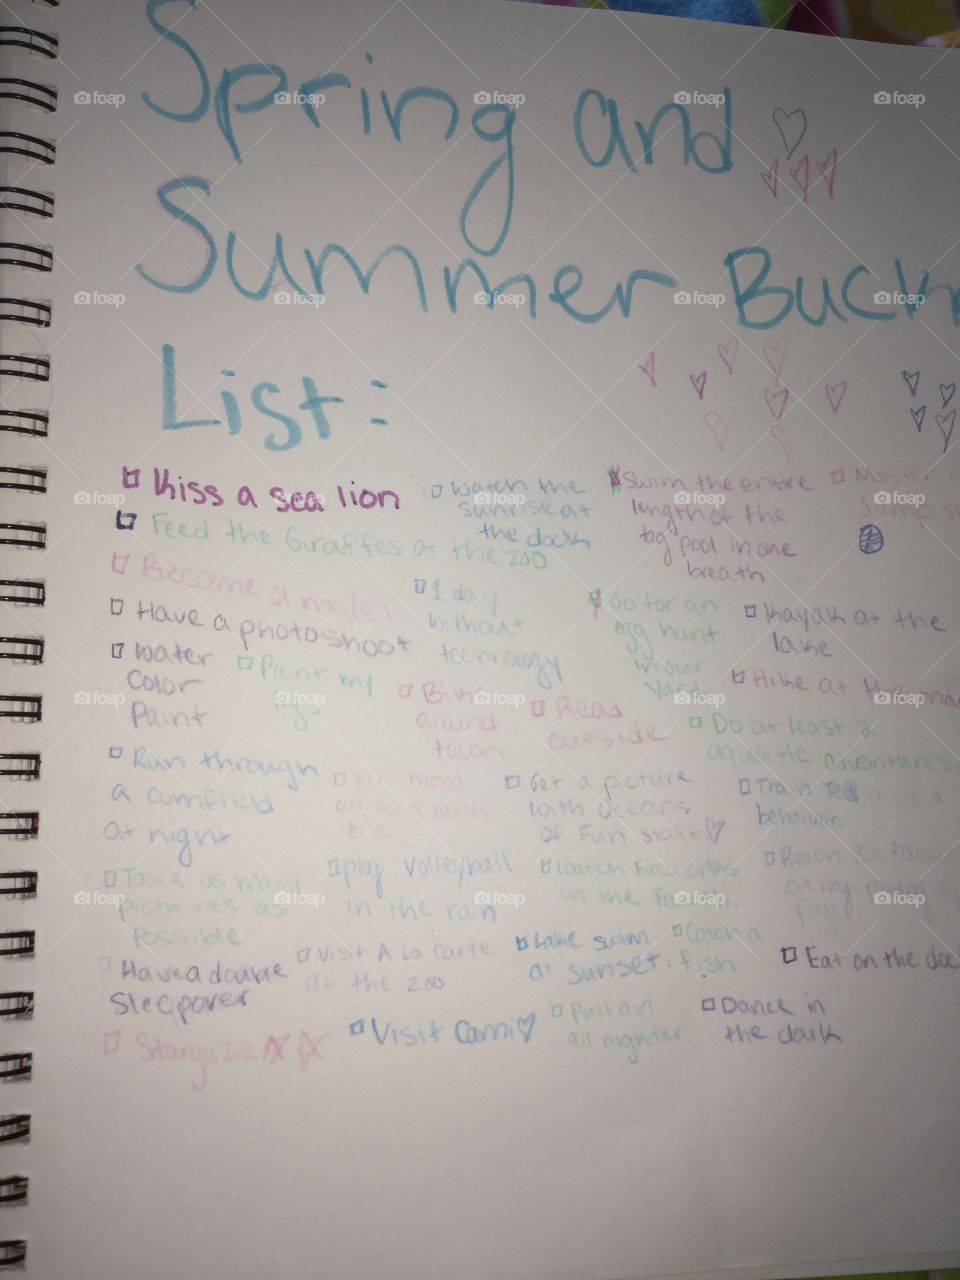 My Summer Bucket List :)